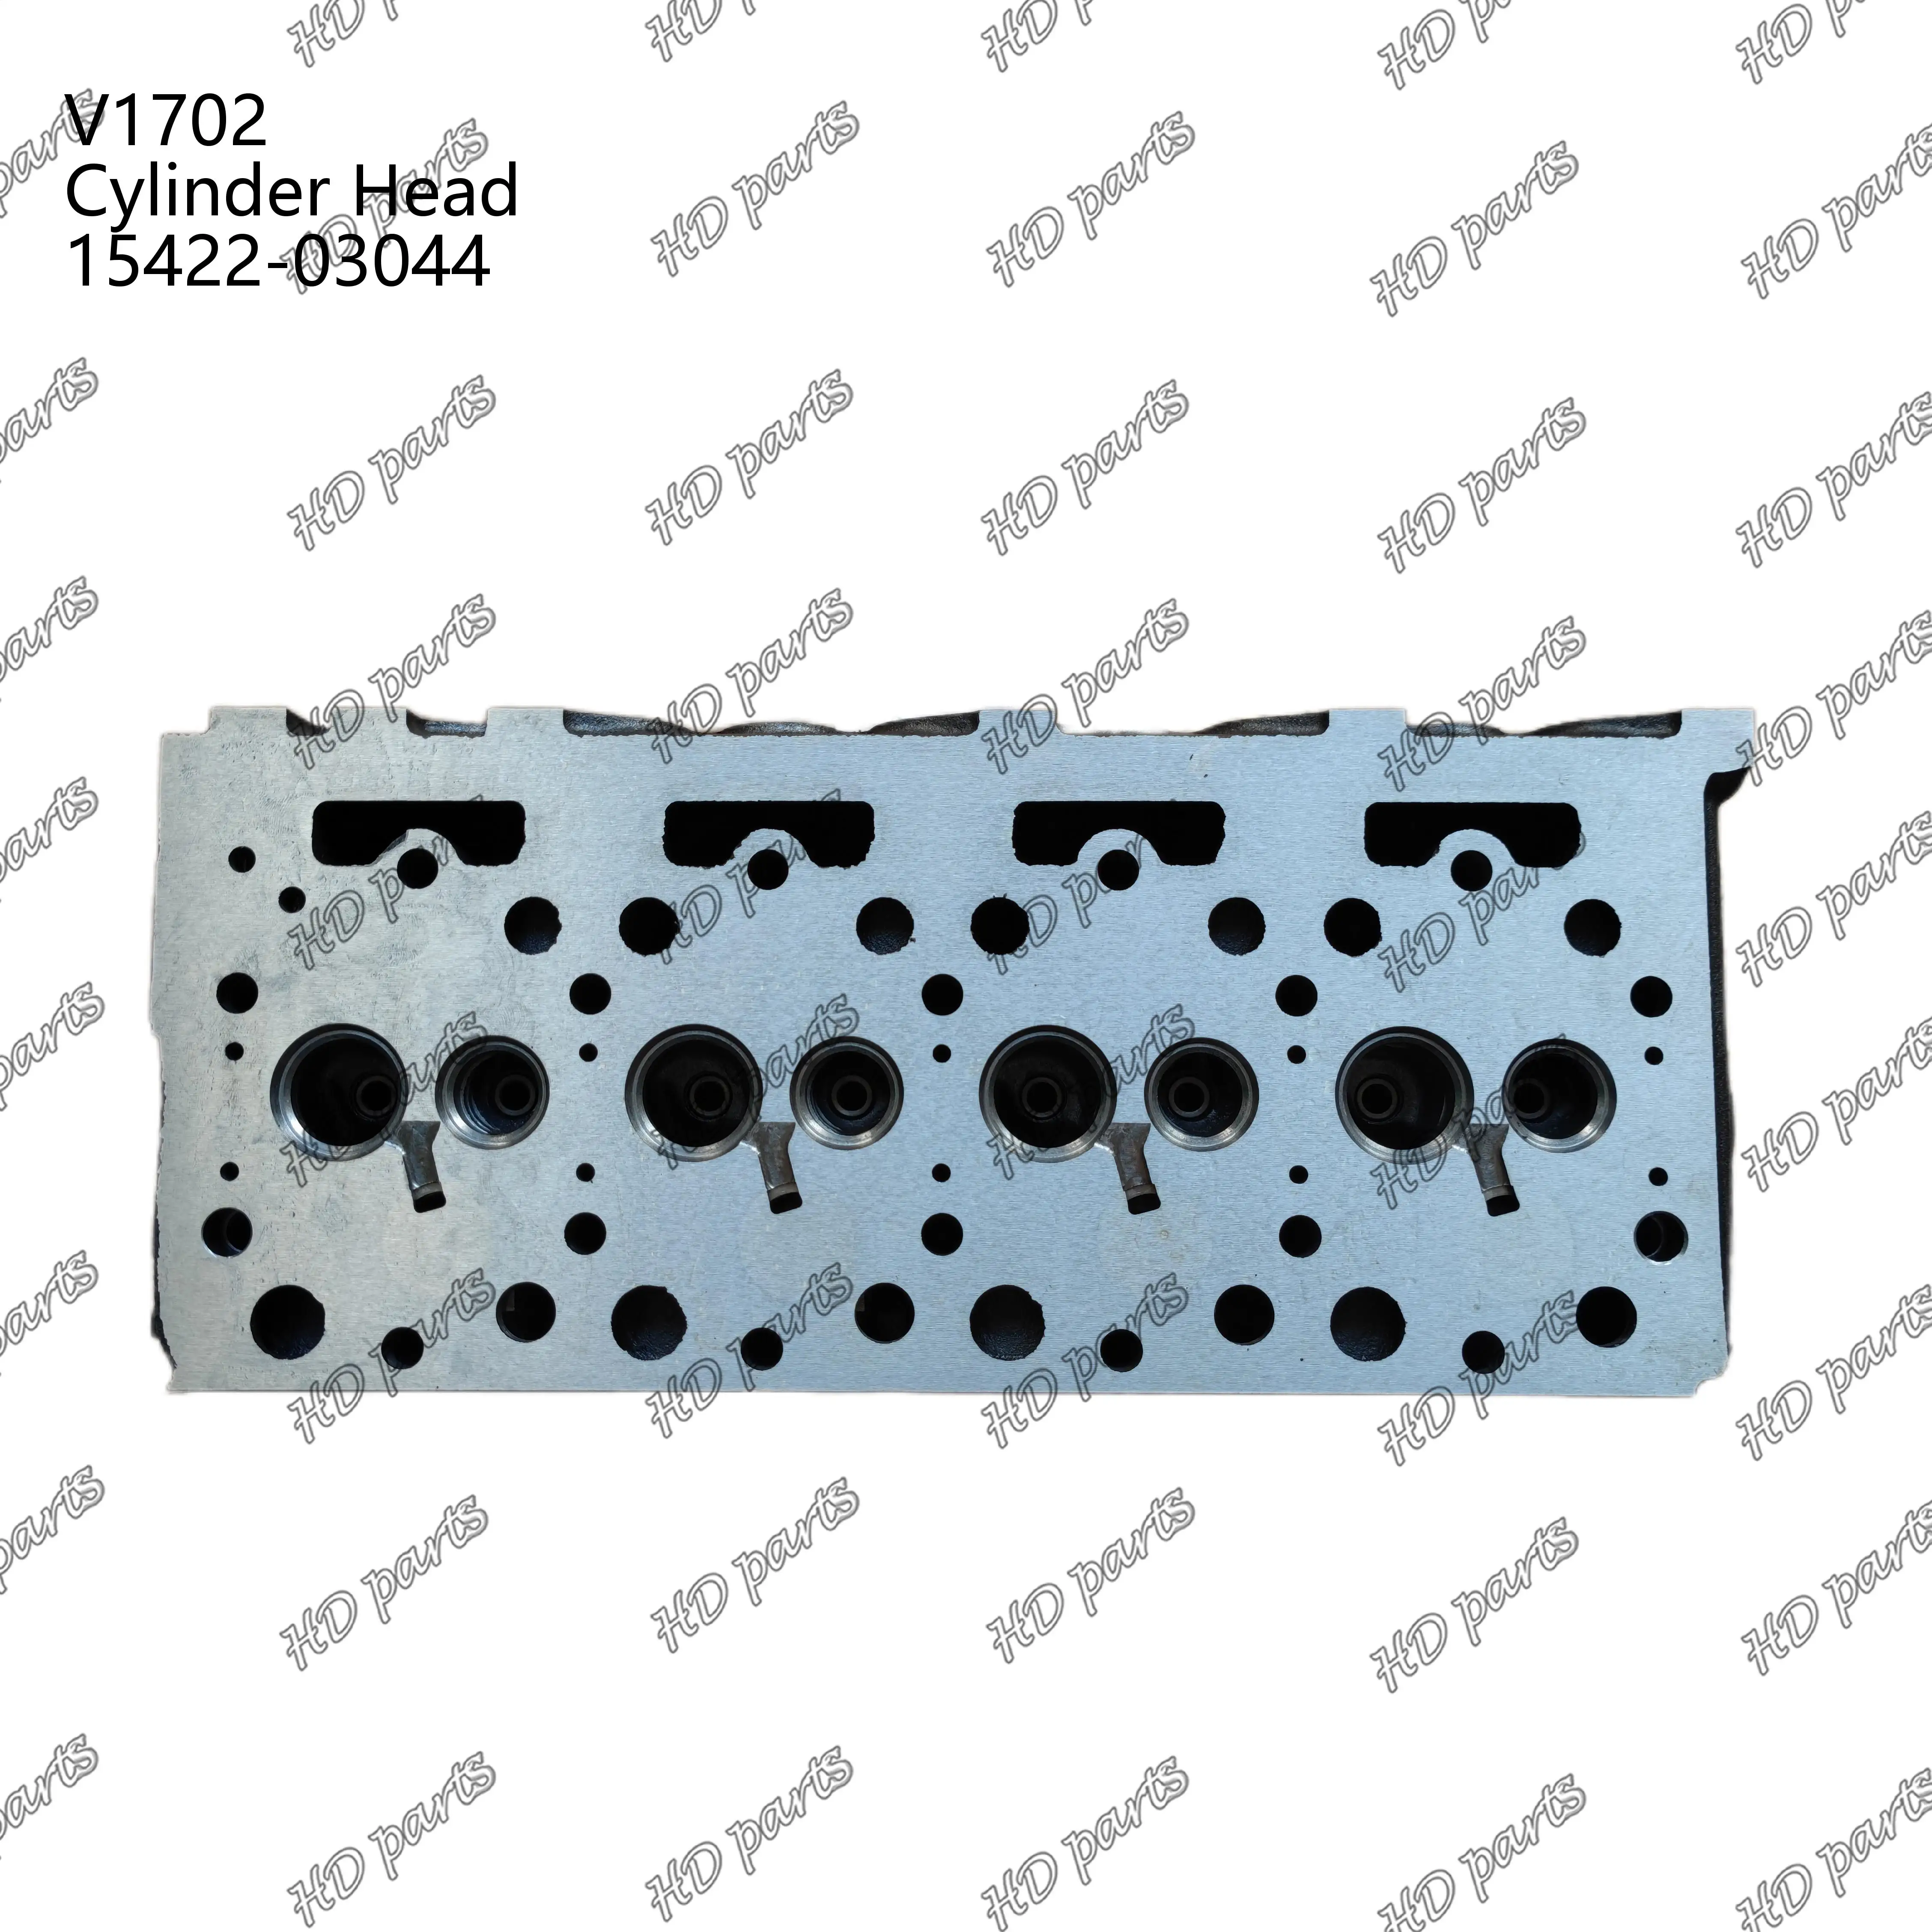 Cylinder Head V1702 With Holes 15422-03044 For Kubota Diesel Engine